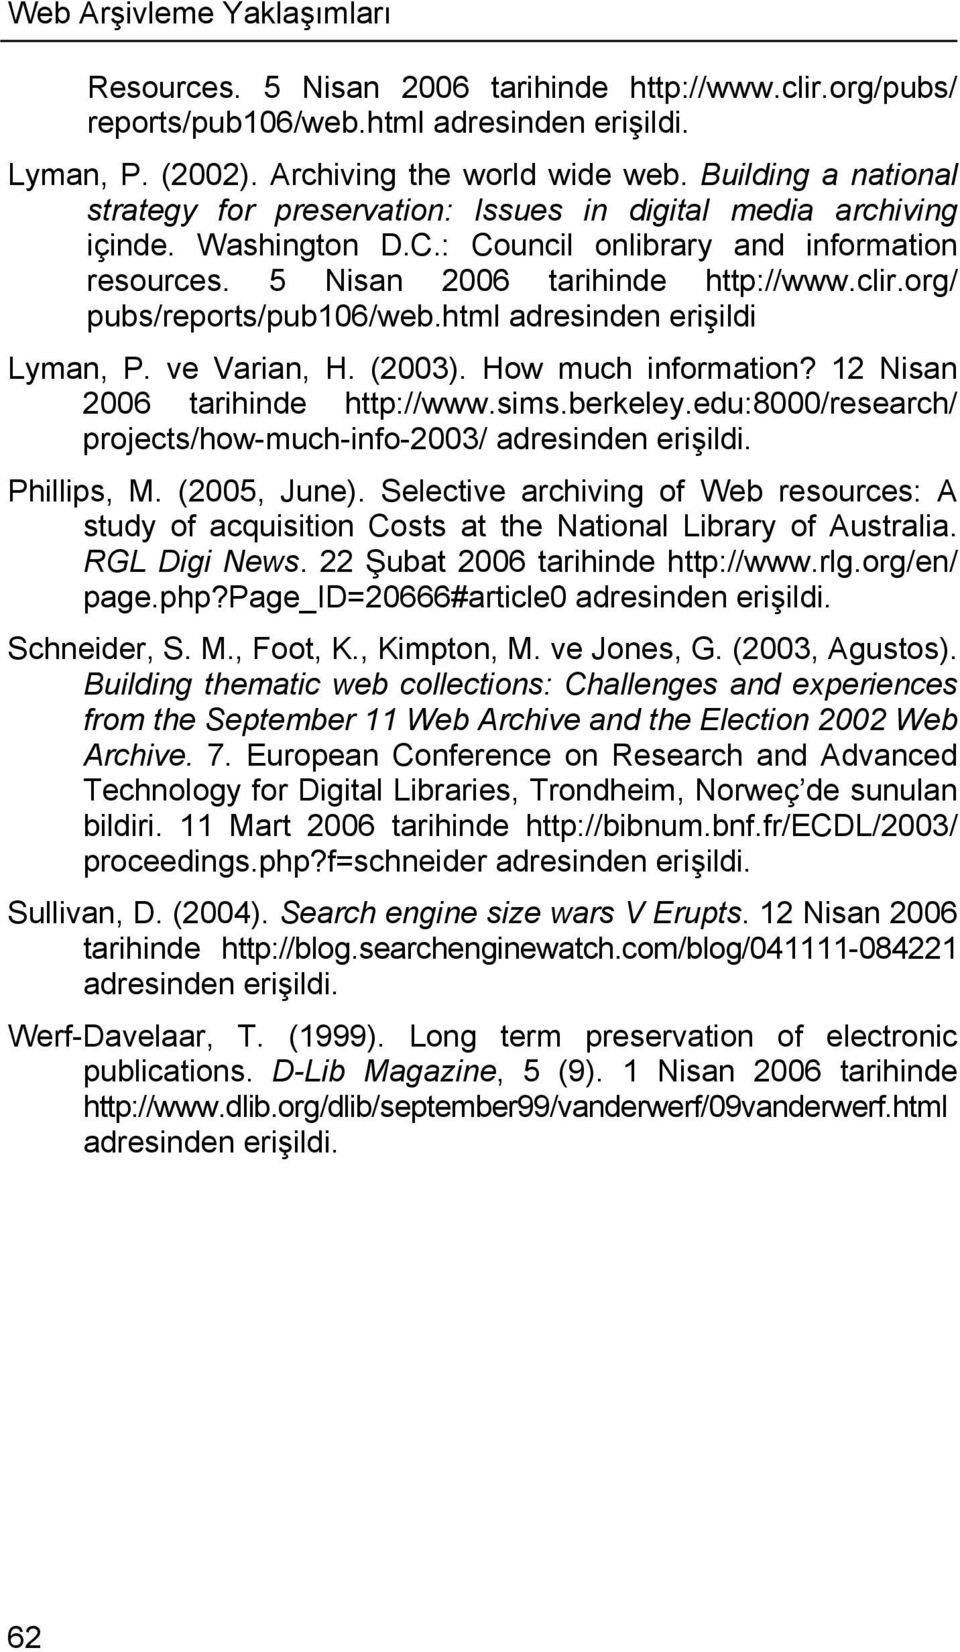 org/ pubs/reports/pub106/web.html adresinden erişildi Lyman, P. ve Varian, H. (2003). How much information? 12 Nisan 2006 tarihinde http://www.sims.berkeley.